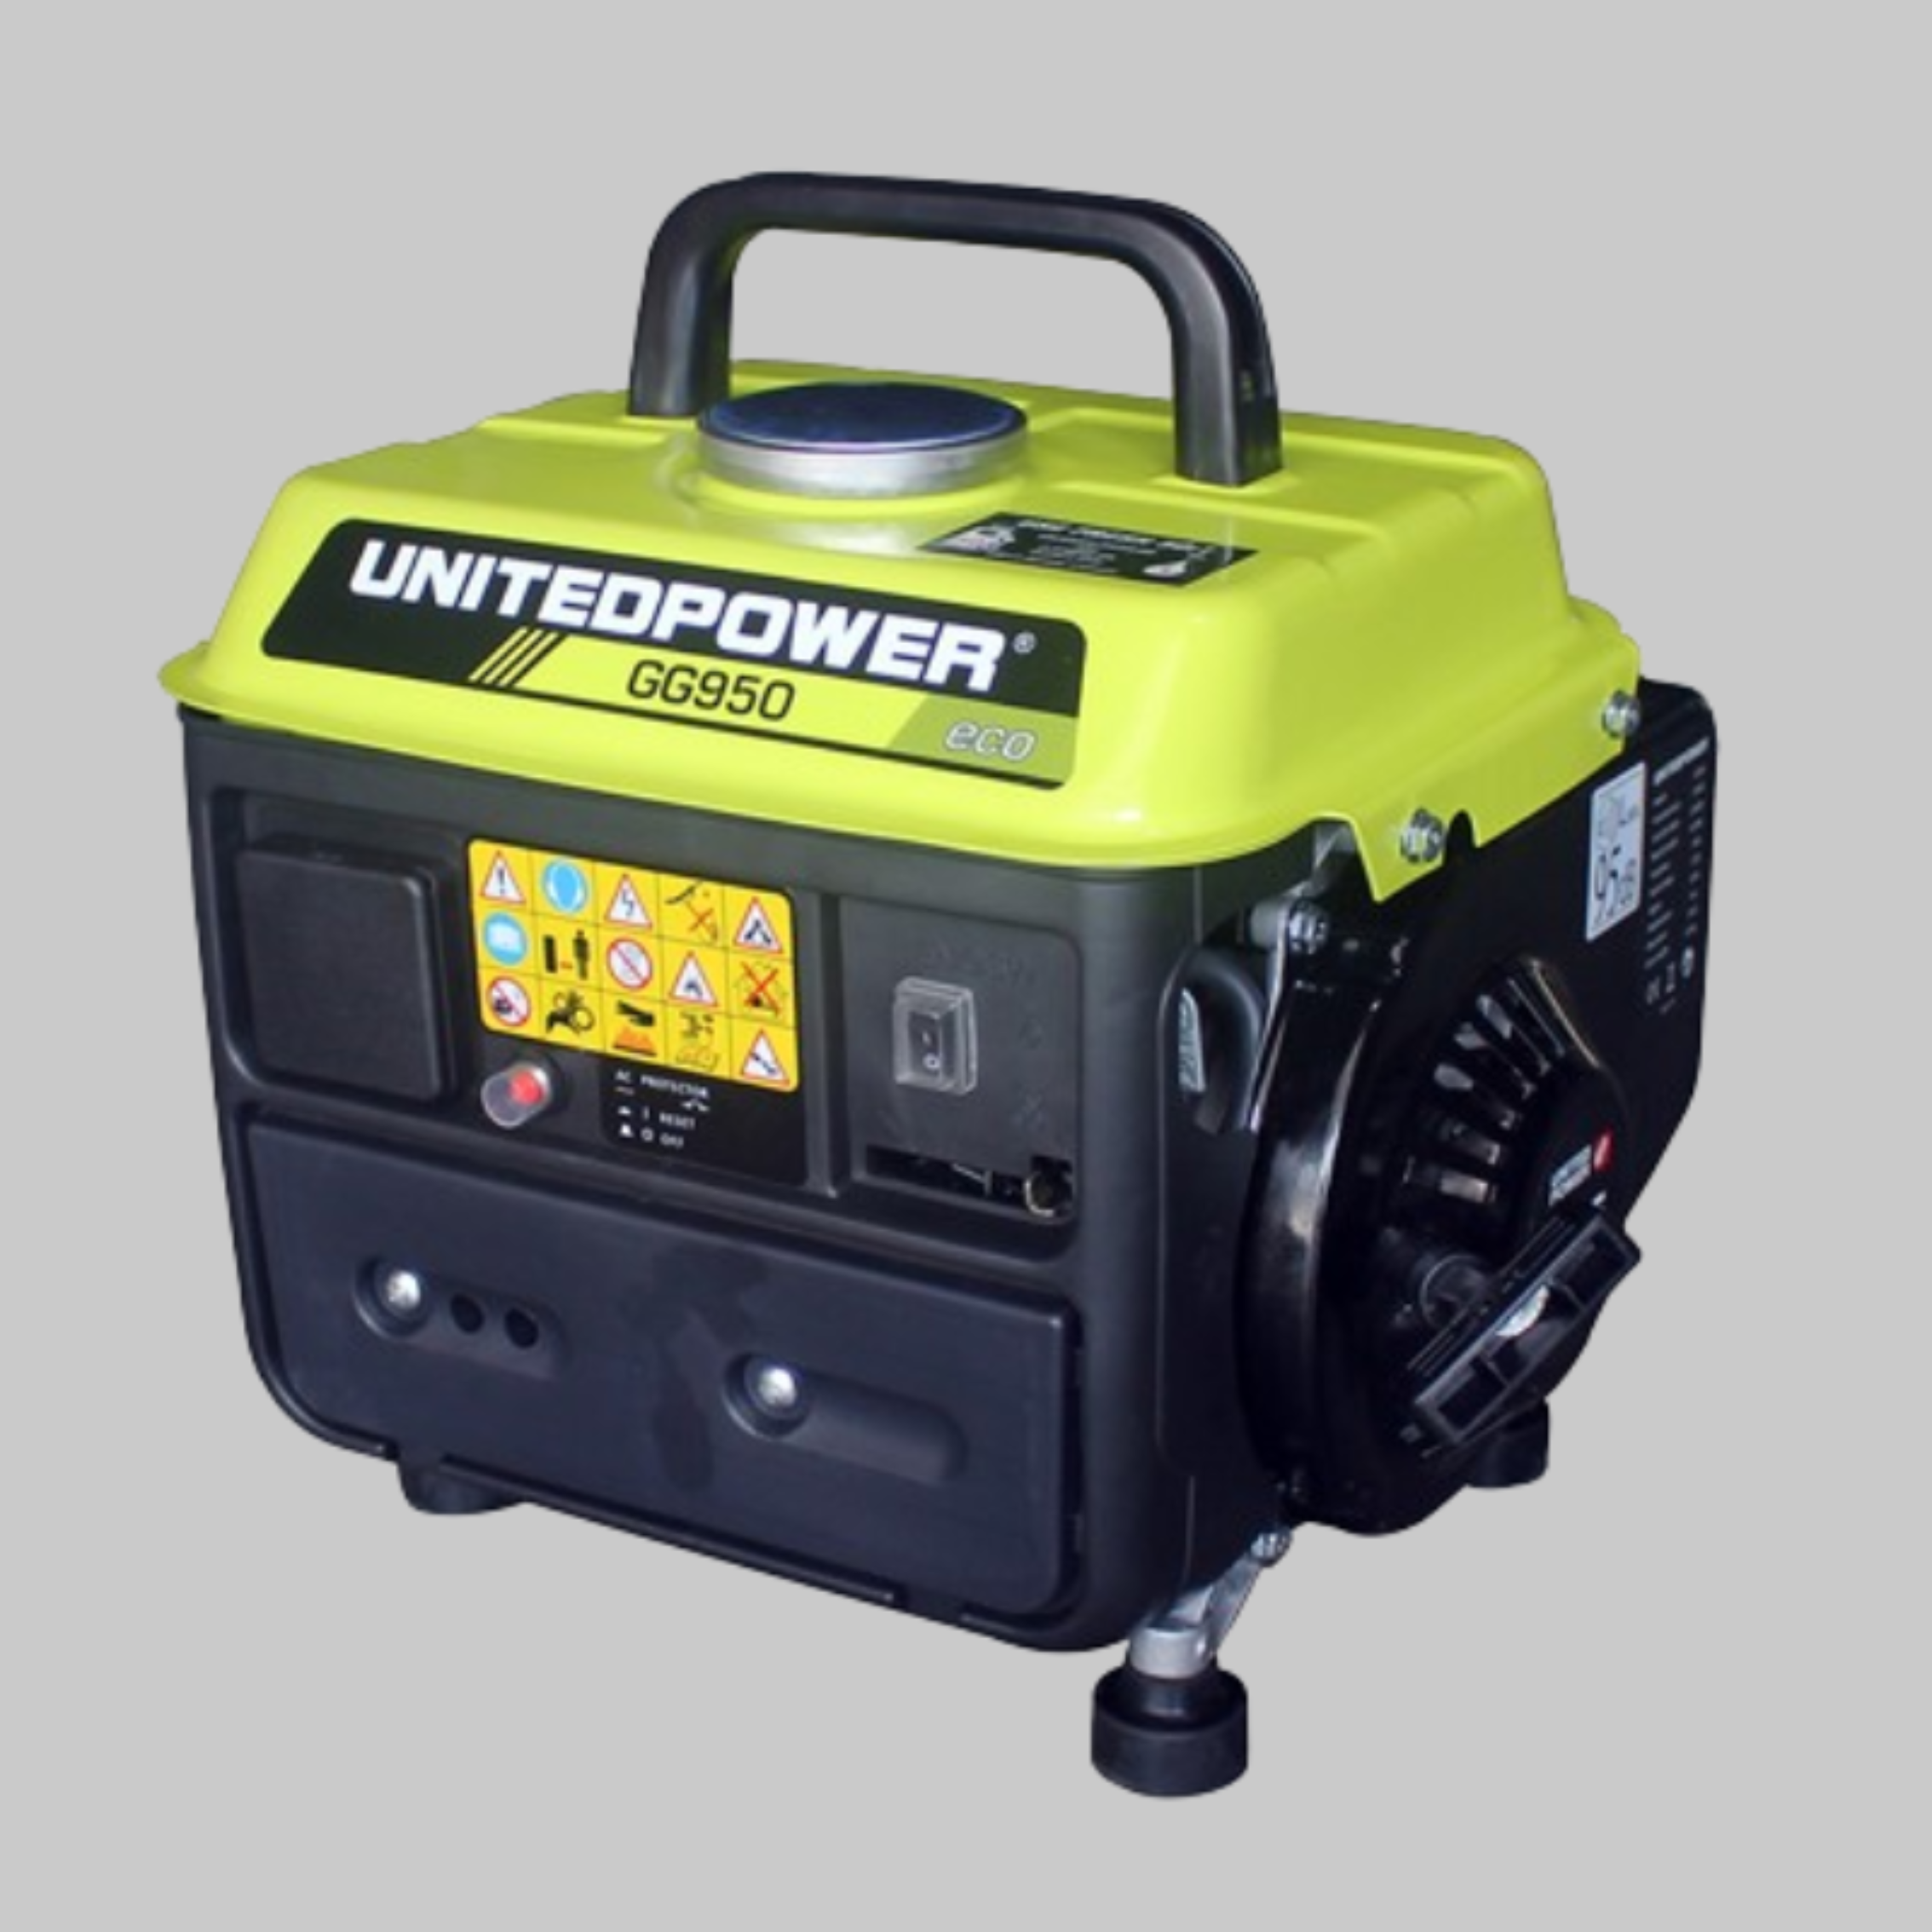 United Power Generator ECO Series 950W (GG950)